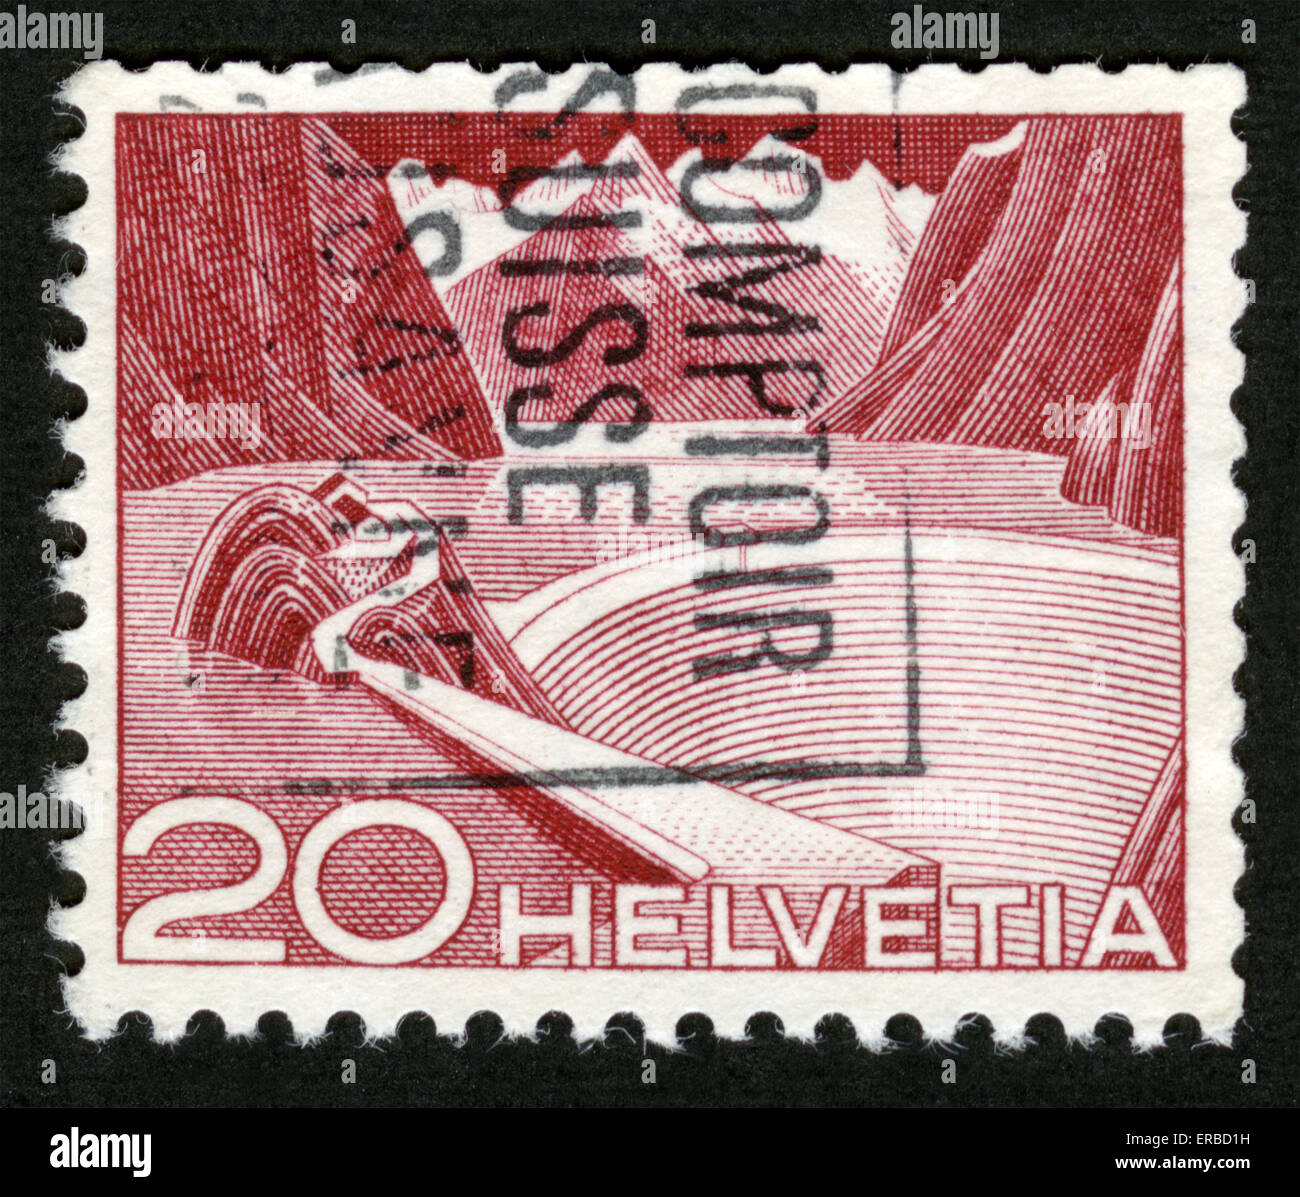 La Svizzera, Helvetia, francobollo, post mark Foto Stock